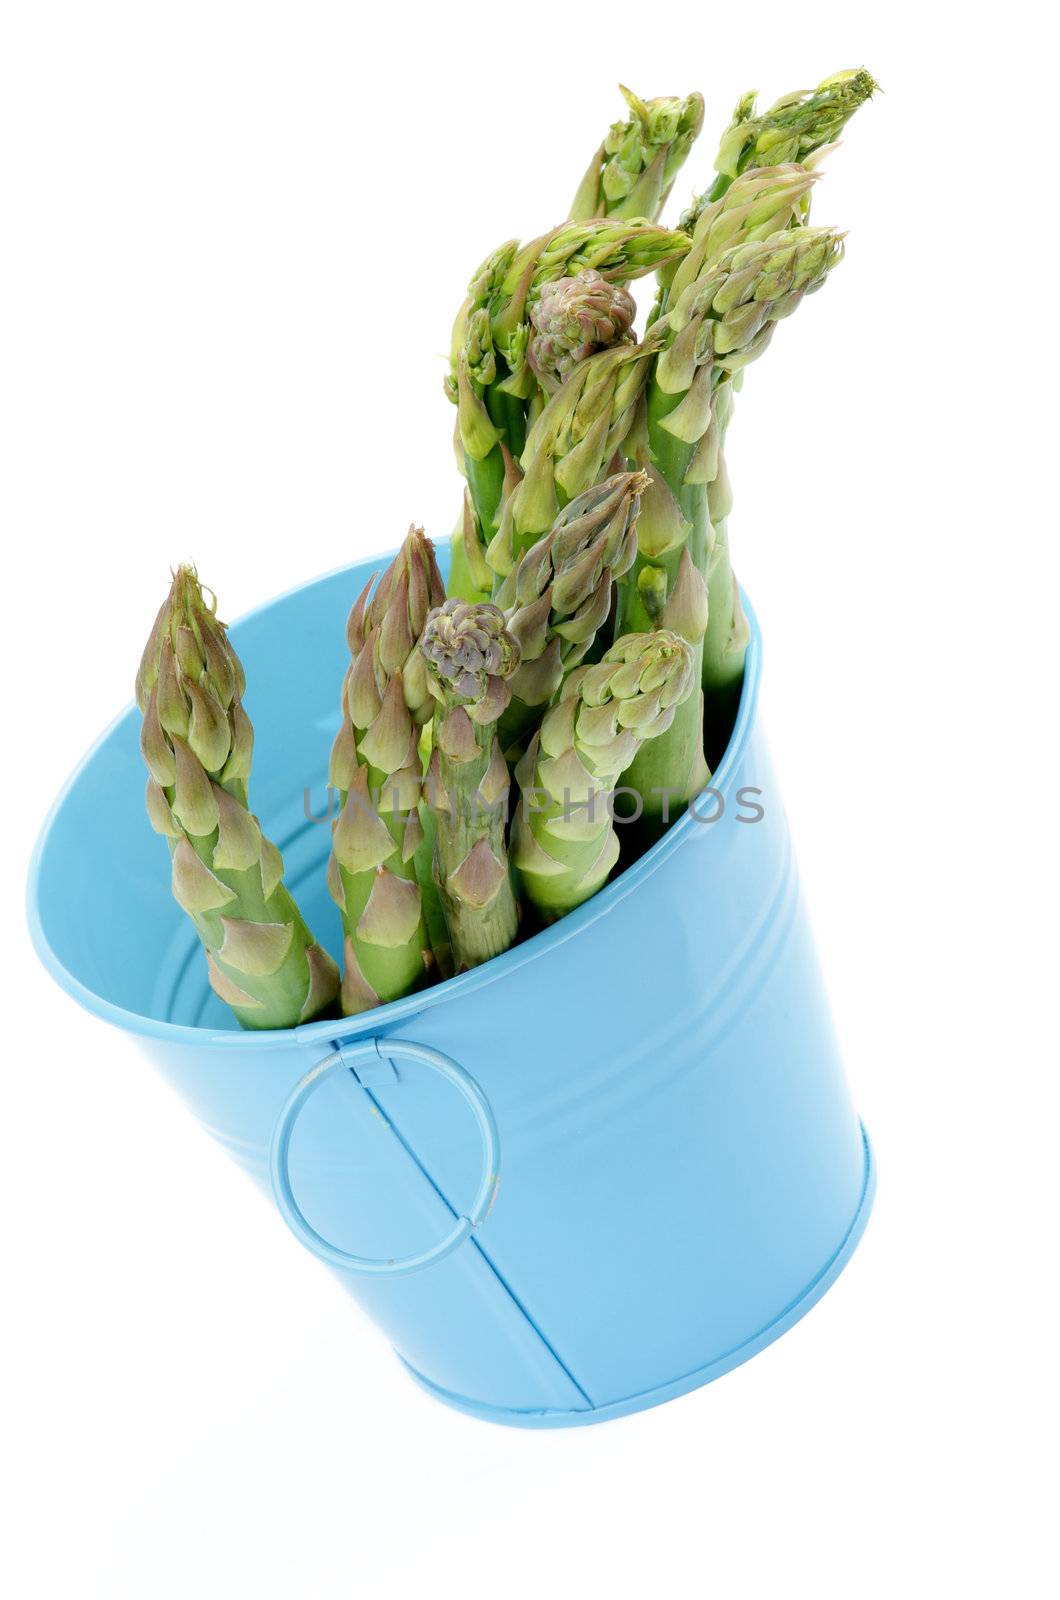 Asparagus in Blue Pot by zhekos